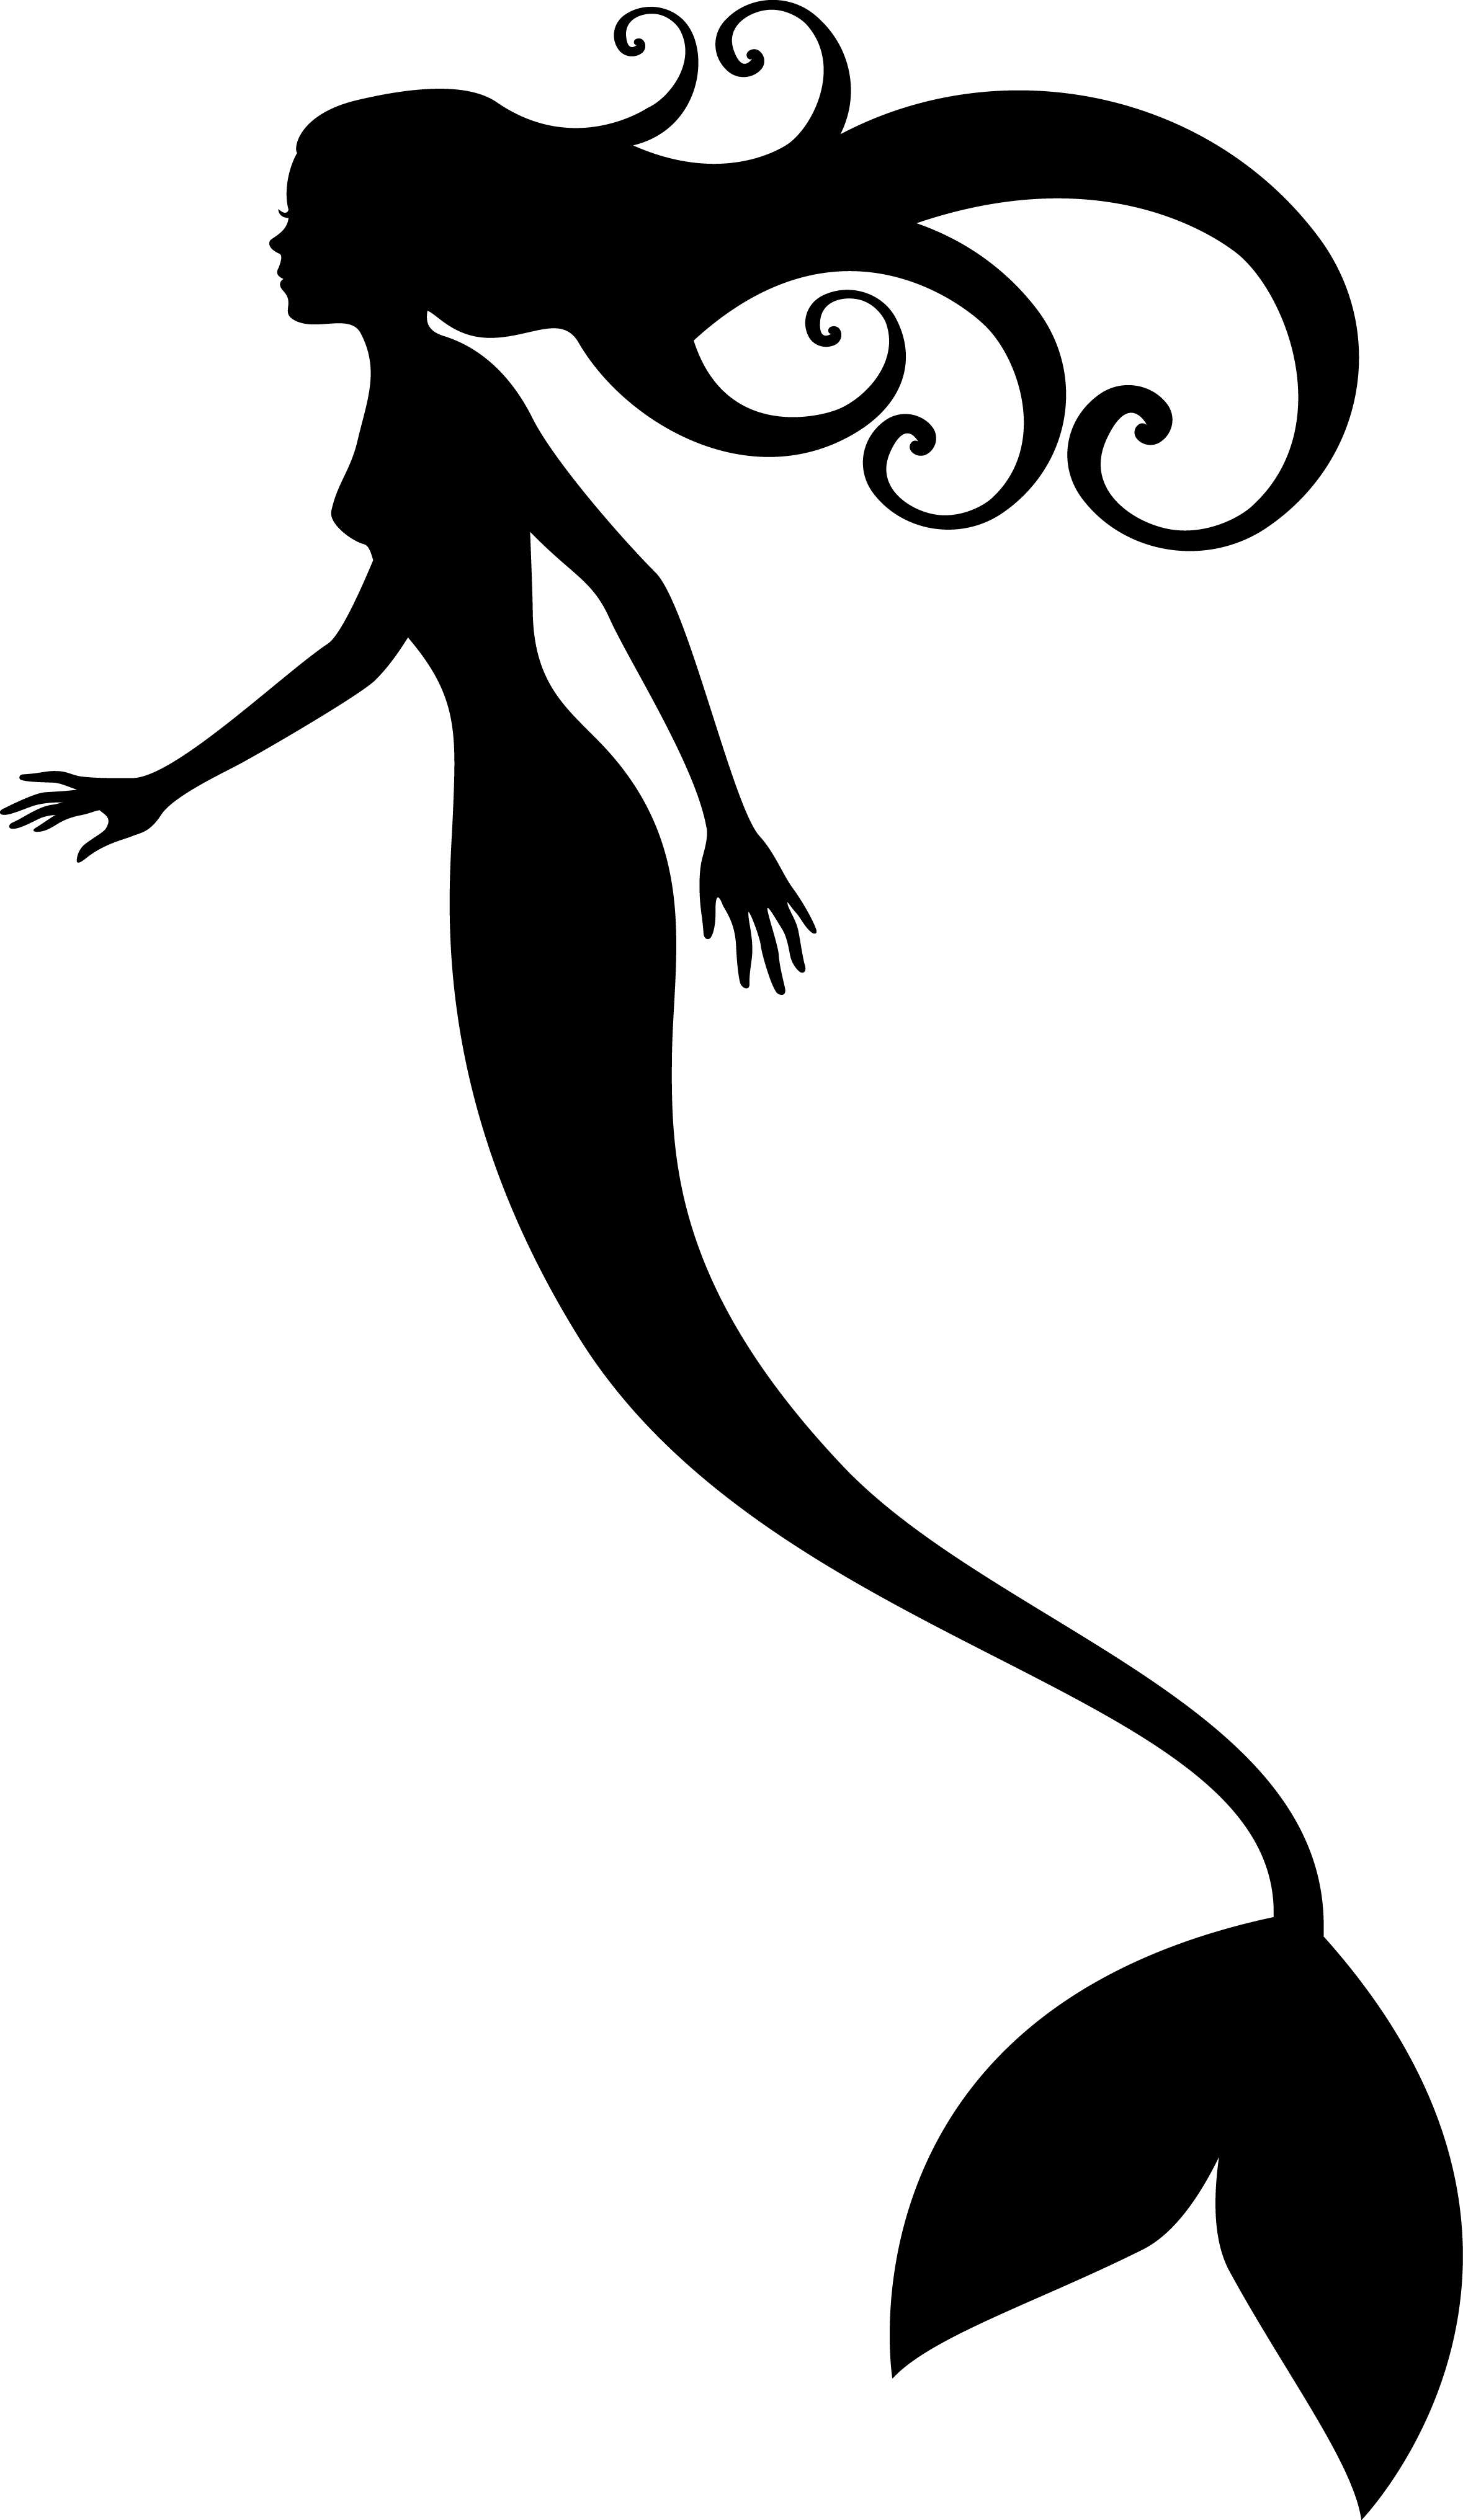 Mermaid tail silhouette.